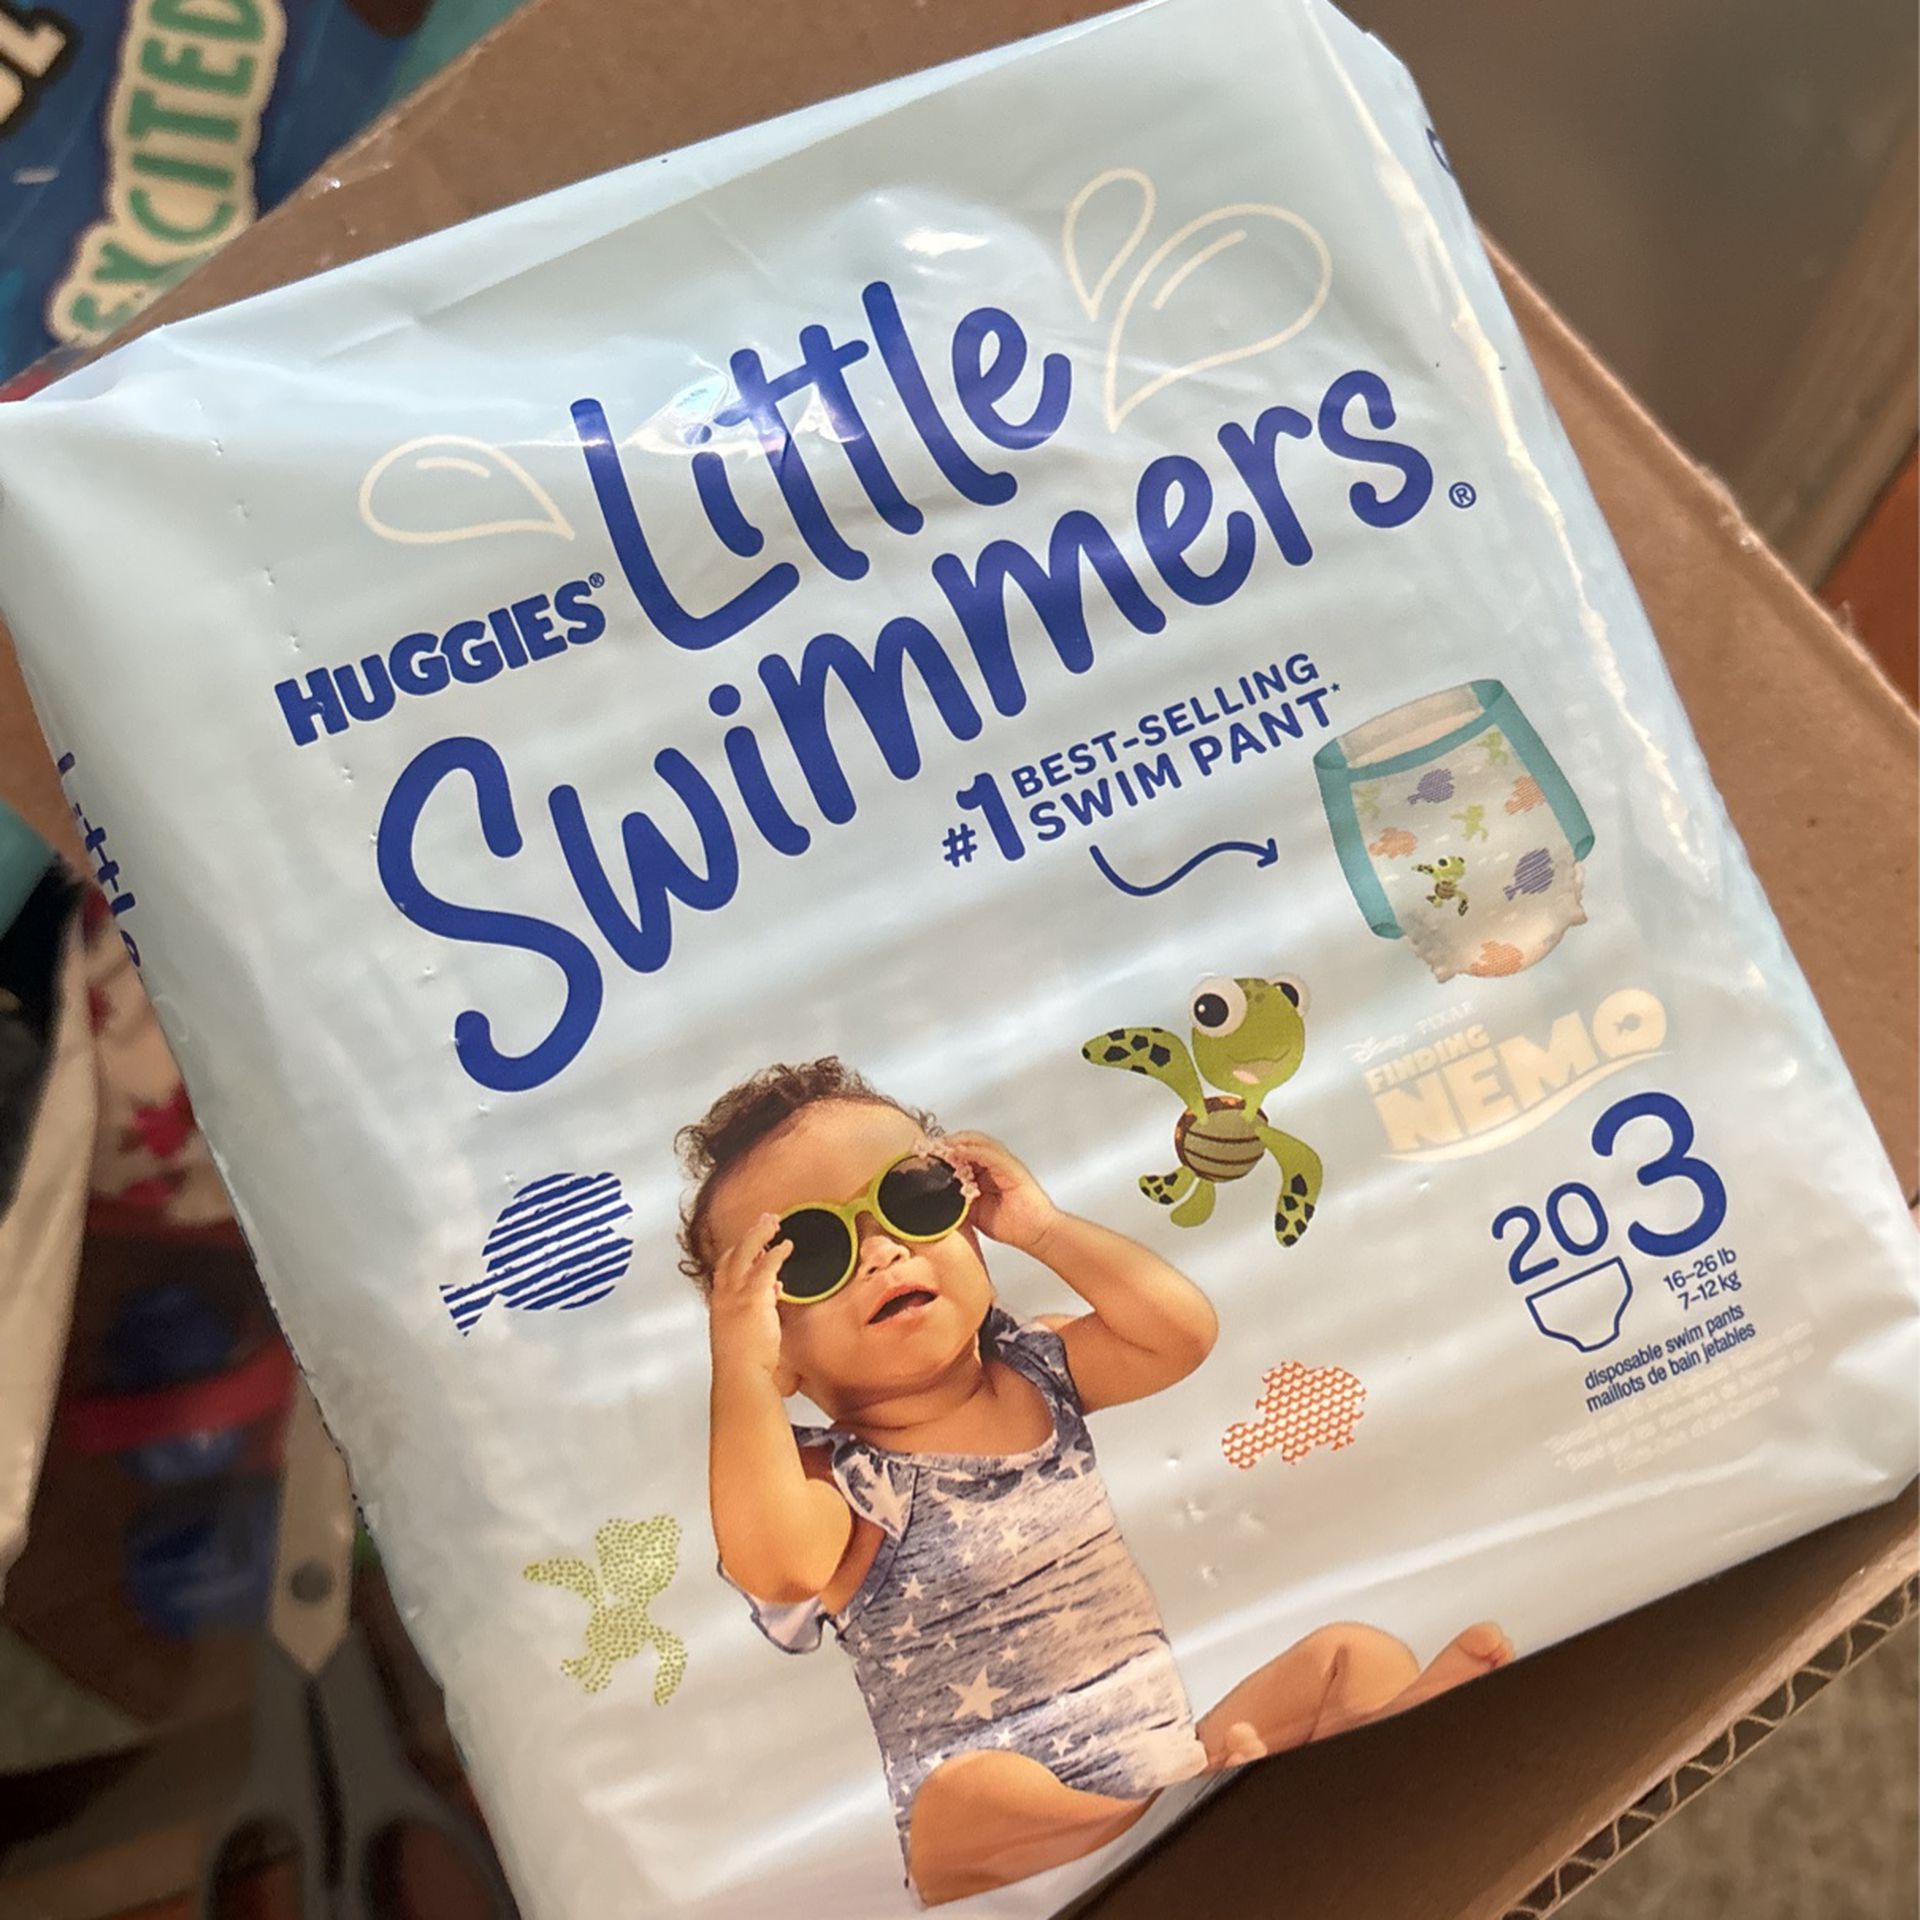 Huggies Little Swimmers 